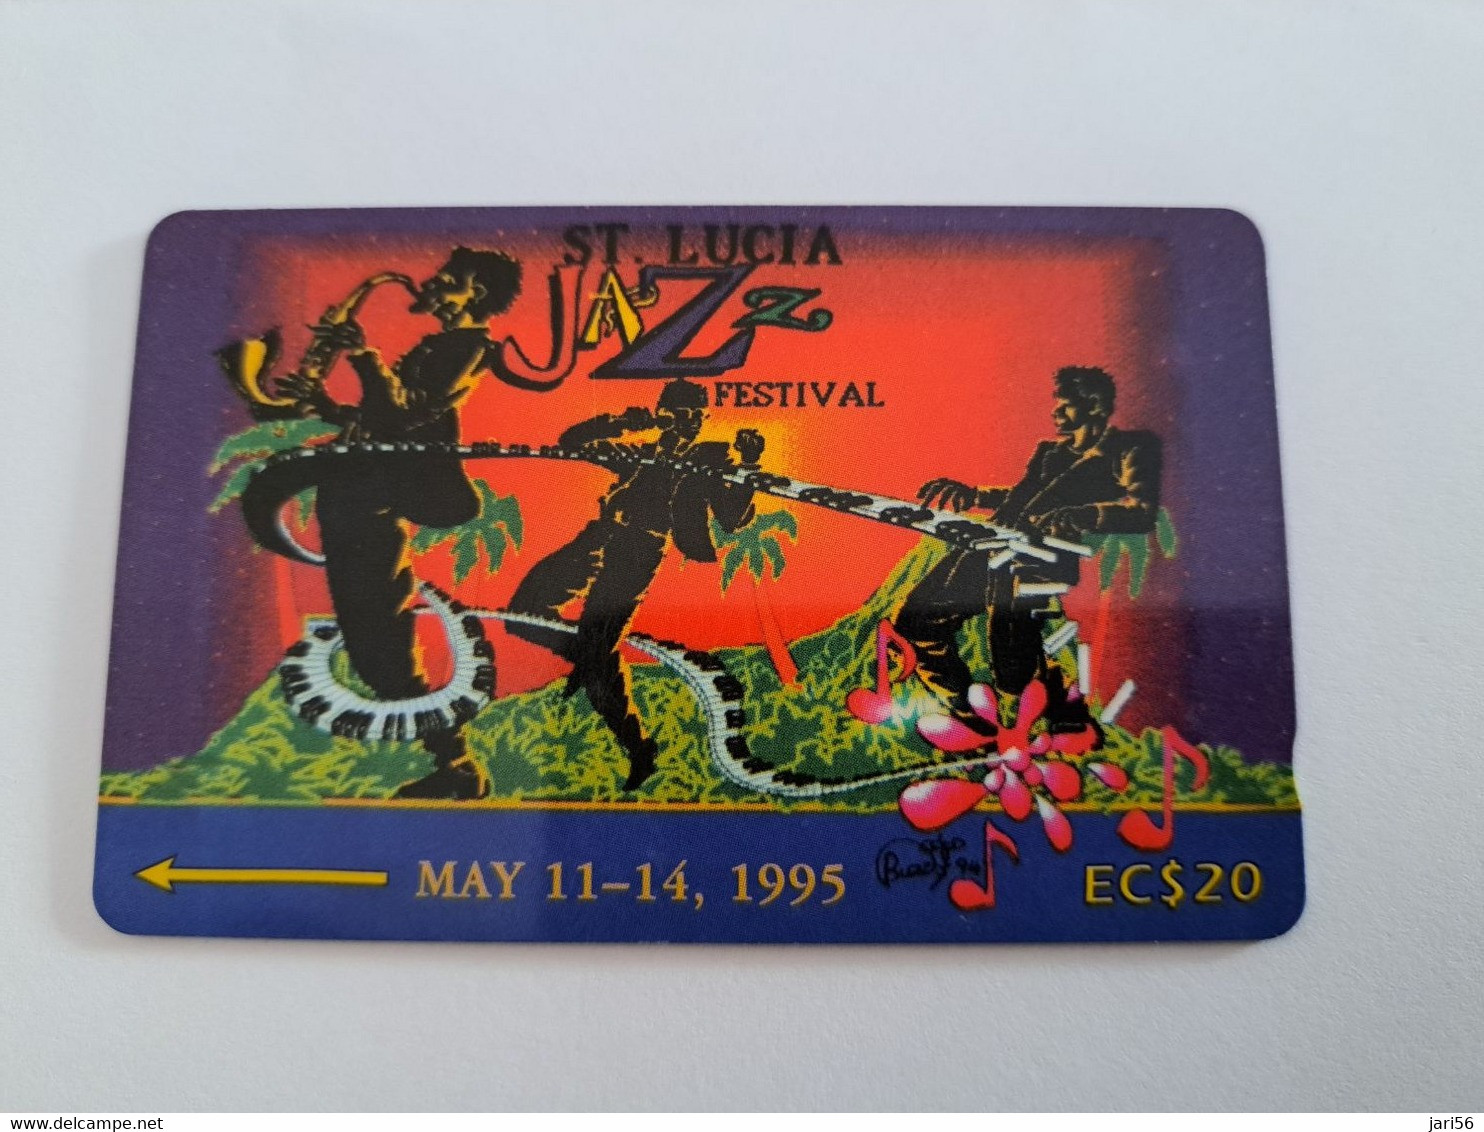 ST LUCIA    $ 20   CABLE & WIRELESS  STL-19A  19CSLA      JAZZ FESTIVAL 1995  Fine Used Card ** 10880** - Santa Lucía